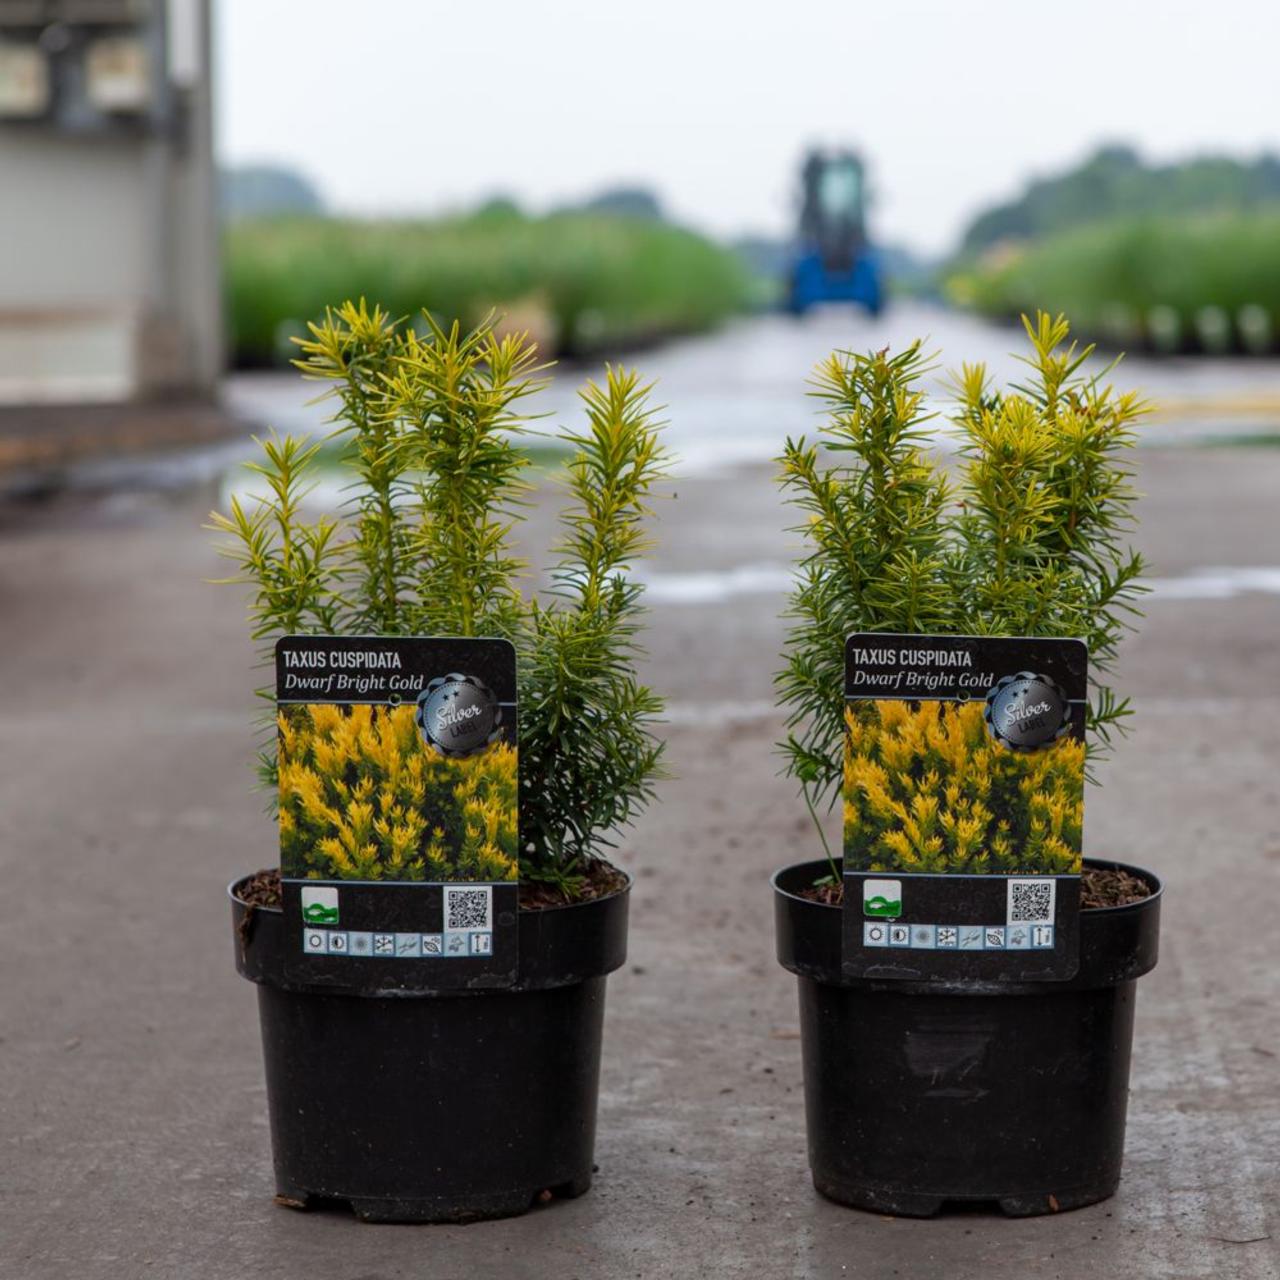 Taxus cuspidata 'Dwarf Bright Gold' plant